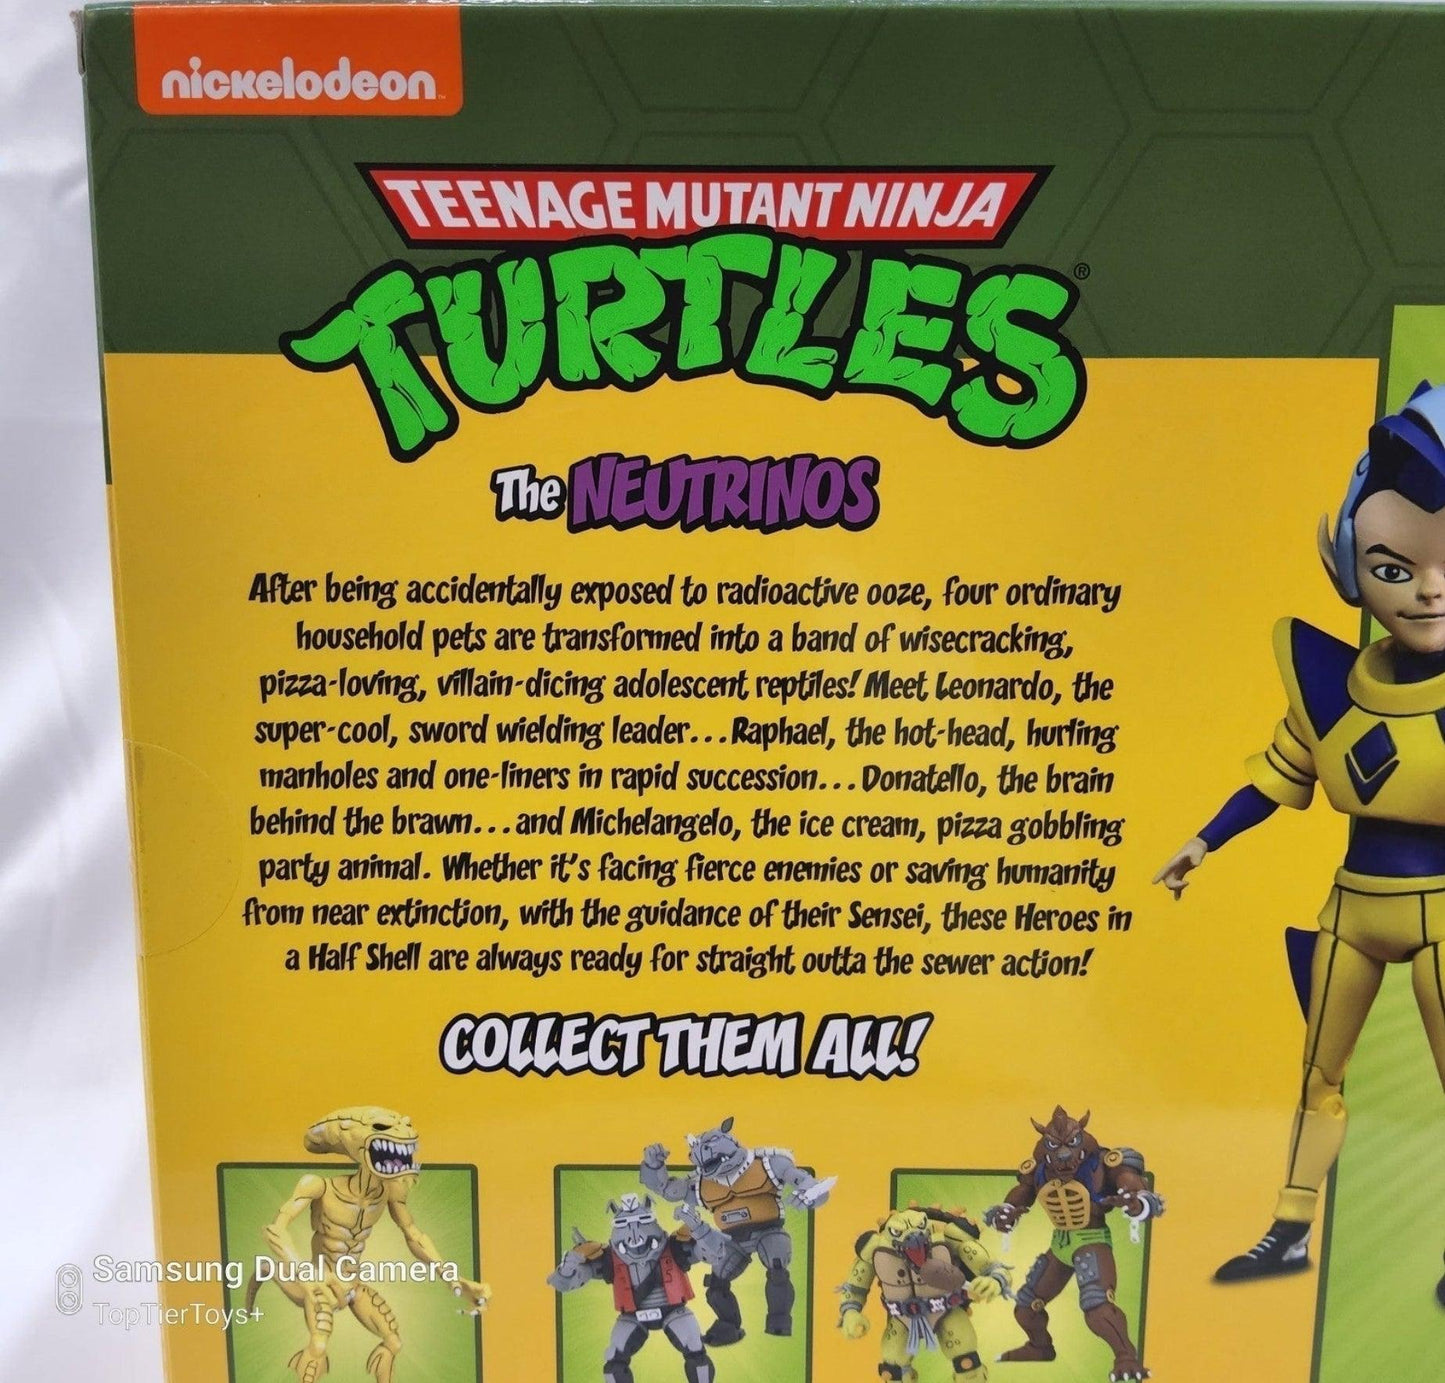 NECA Teenage Mutant Ninja Turtles TMNT Neutrinos Nickelodeon Figures - Logan's Toy Chest